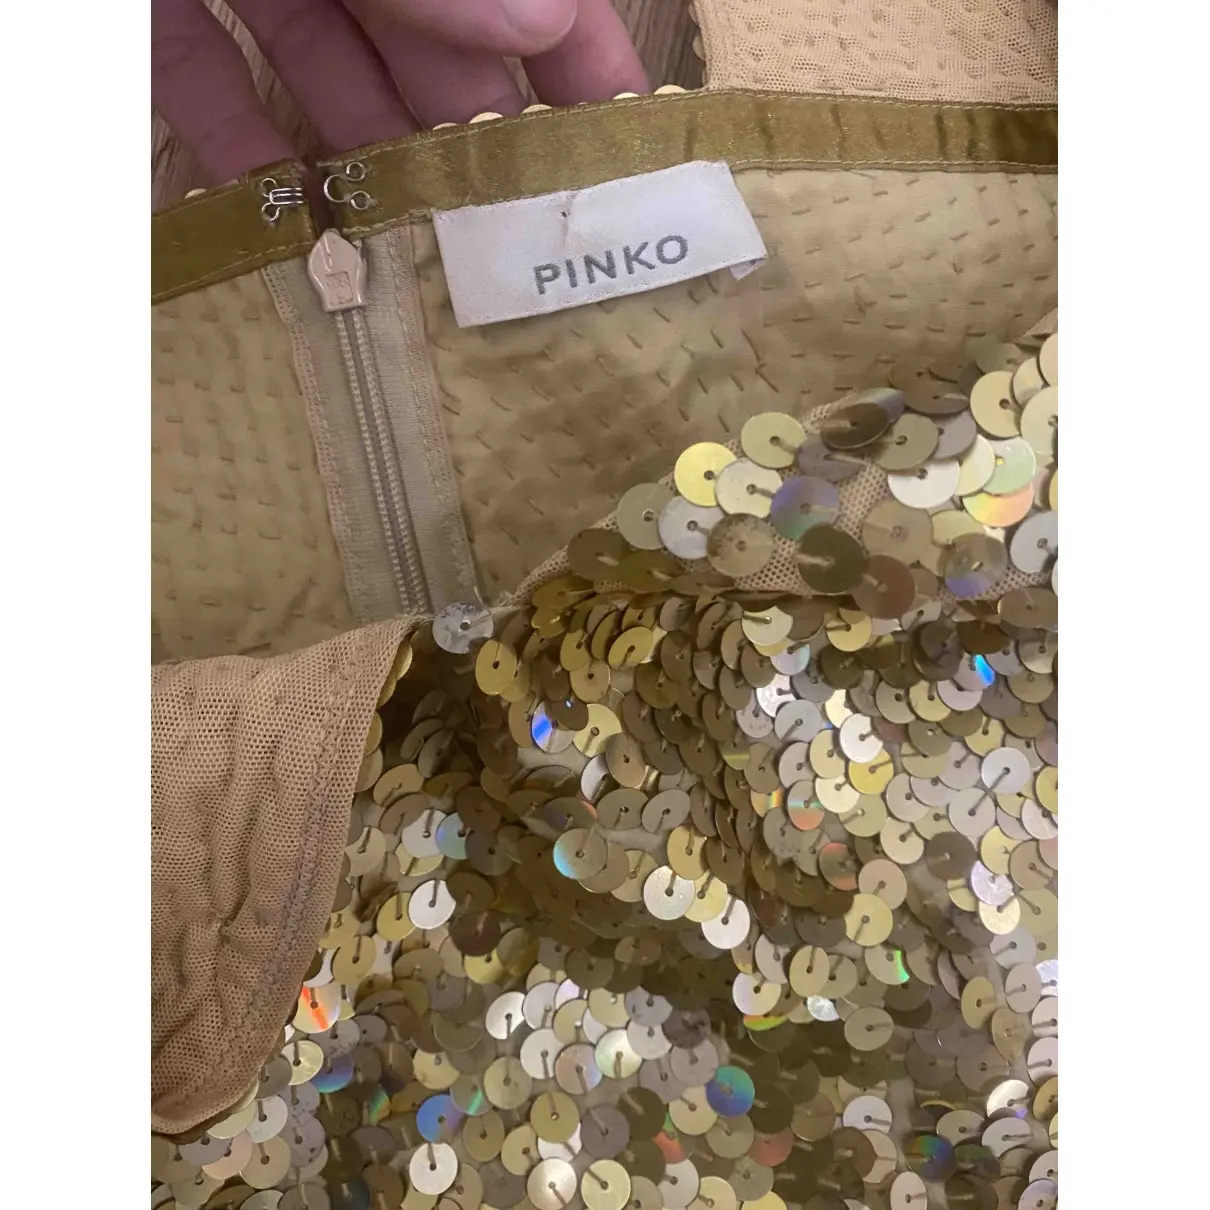 Buy Pinko Glitter mini dress online